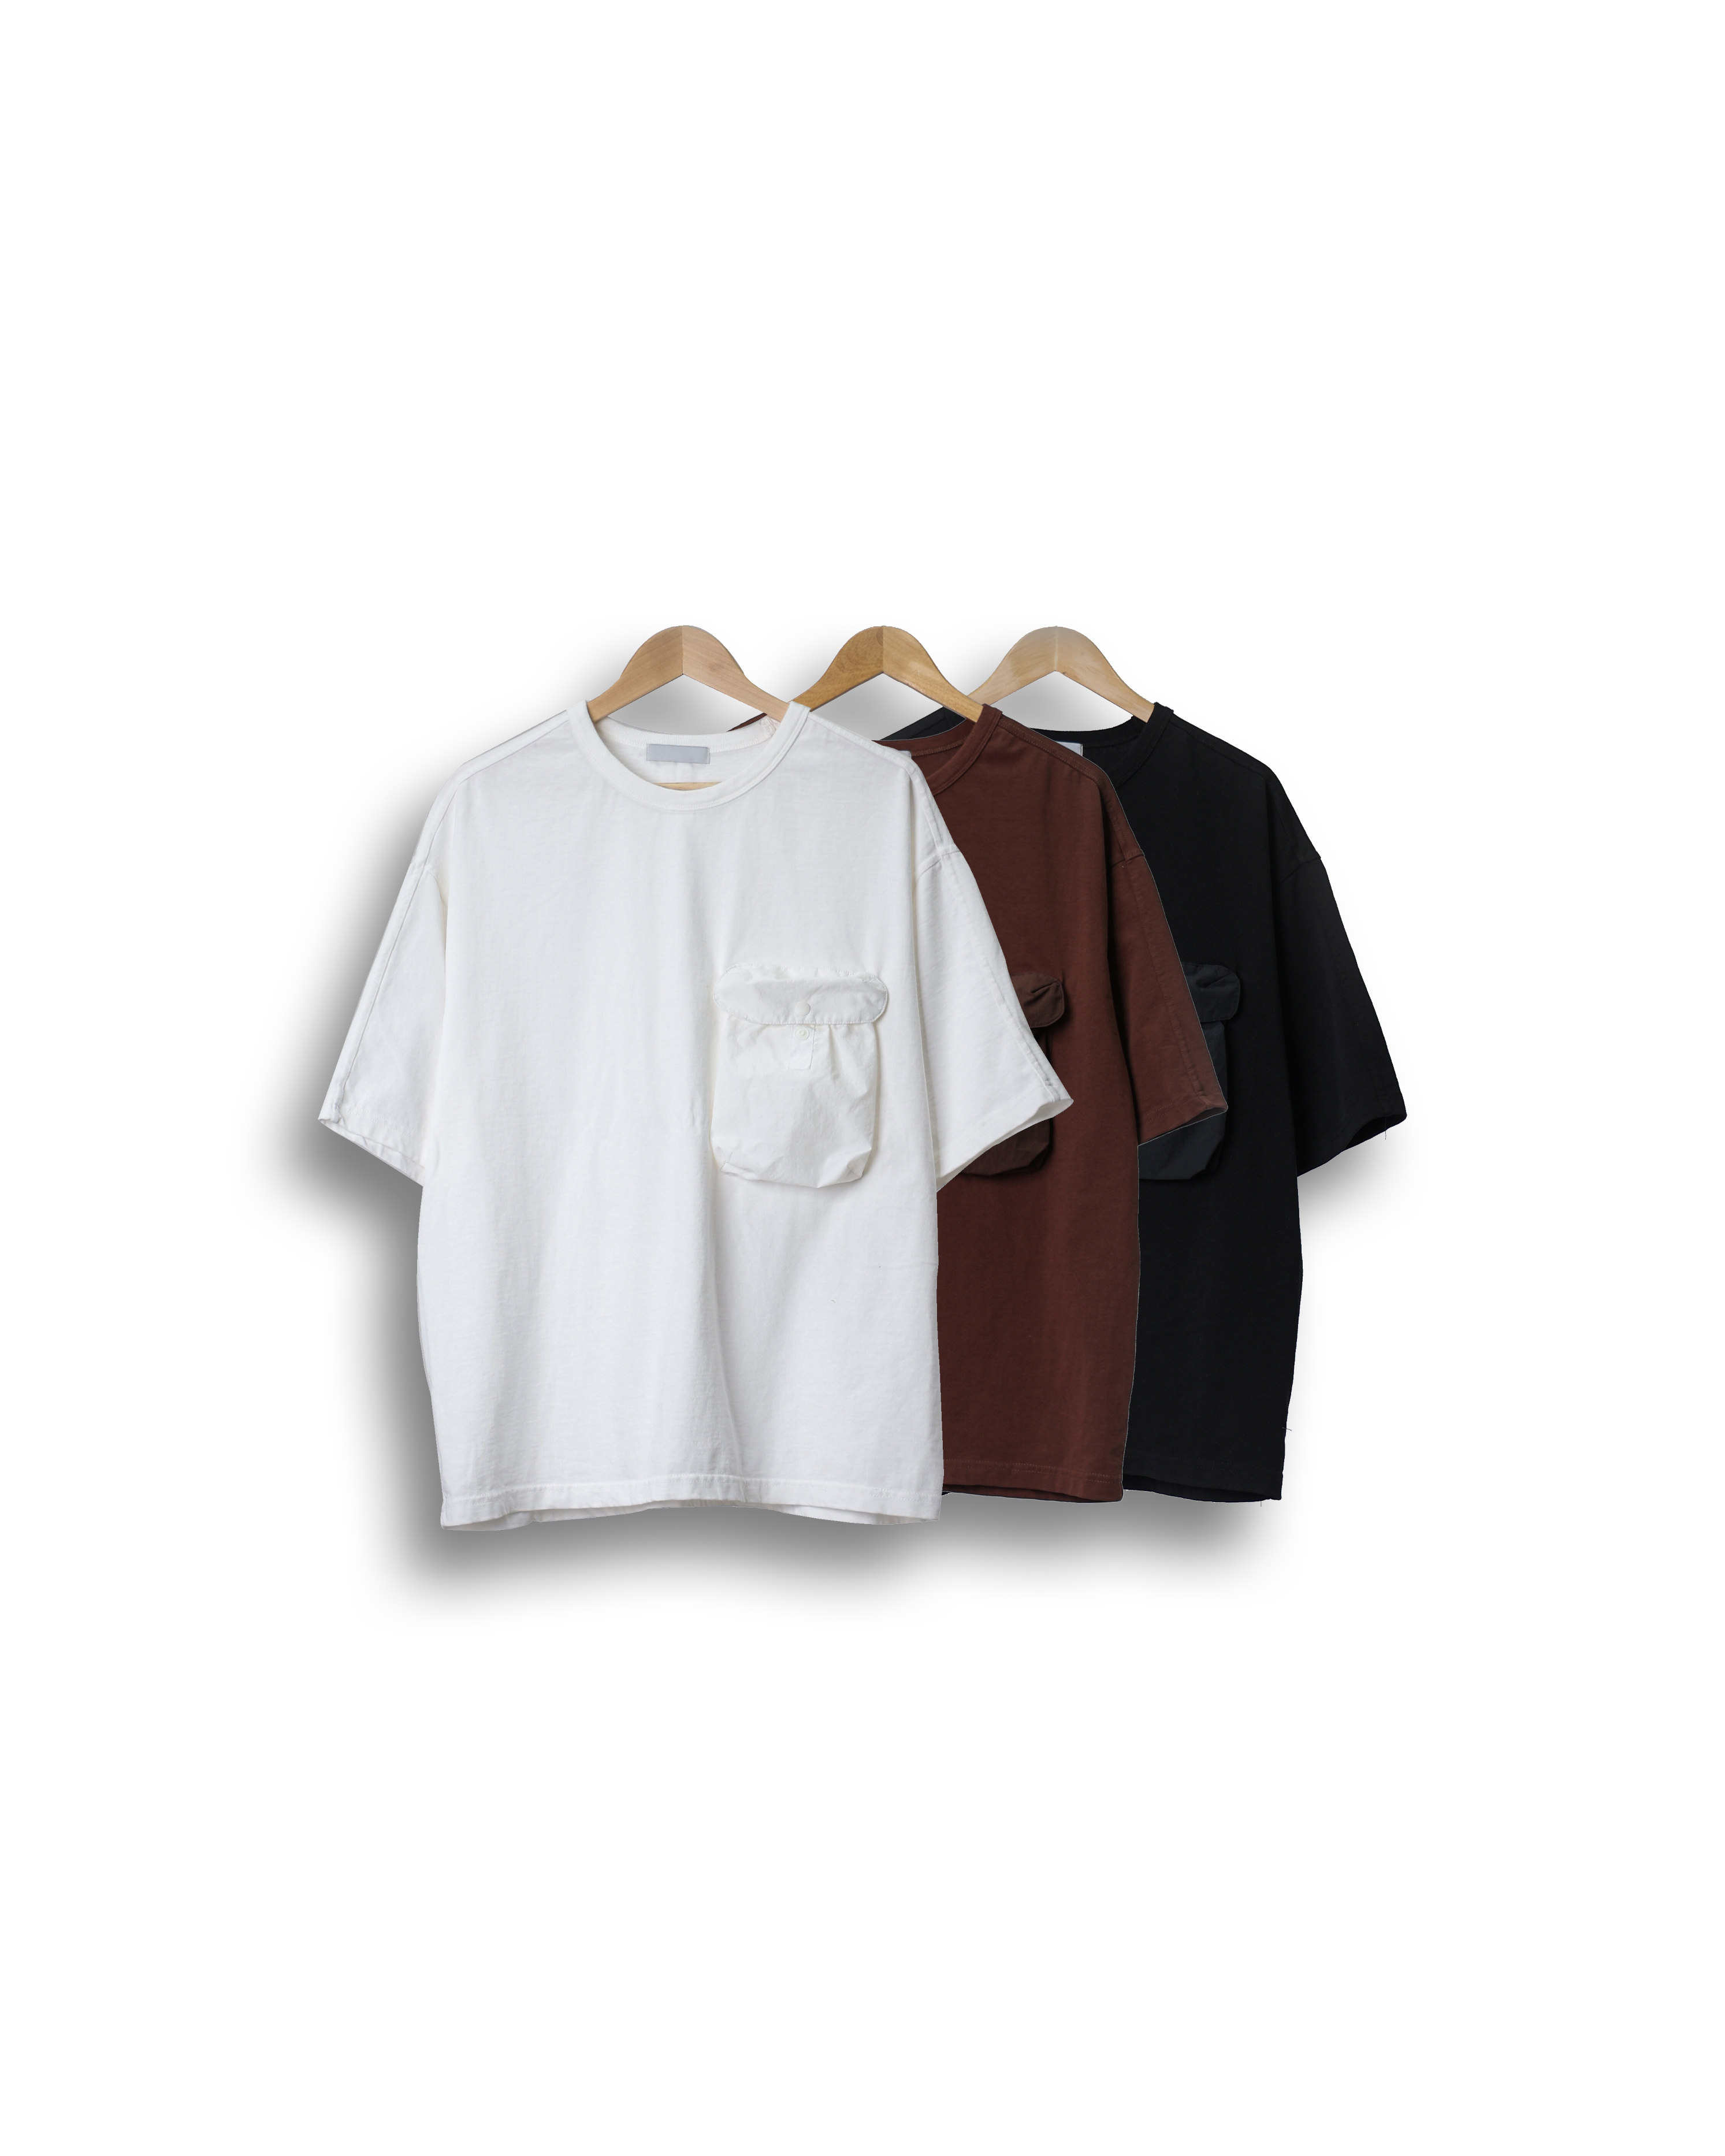 PECTR Mili Diment Pocket T Shirts (Black/Brown/Ivory)